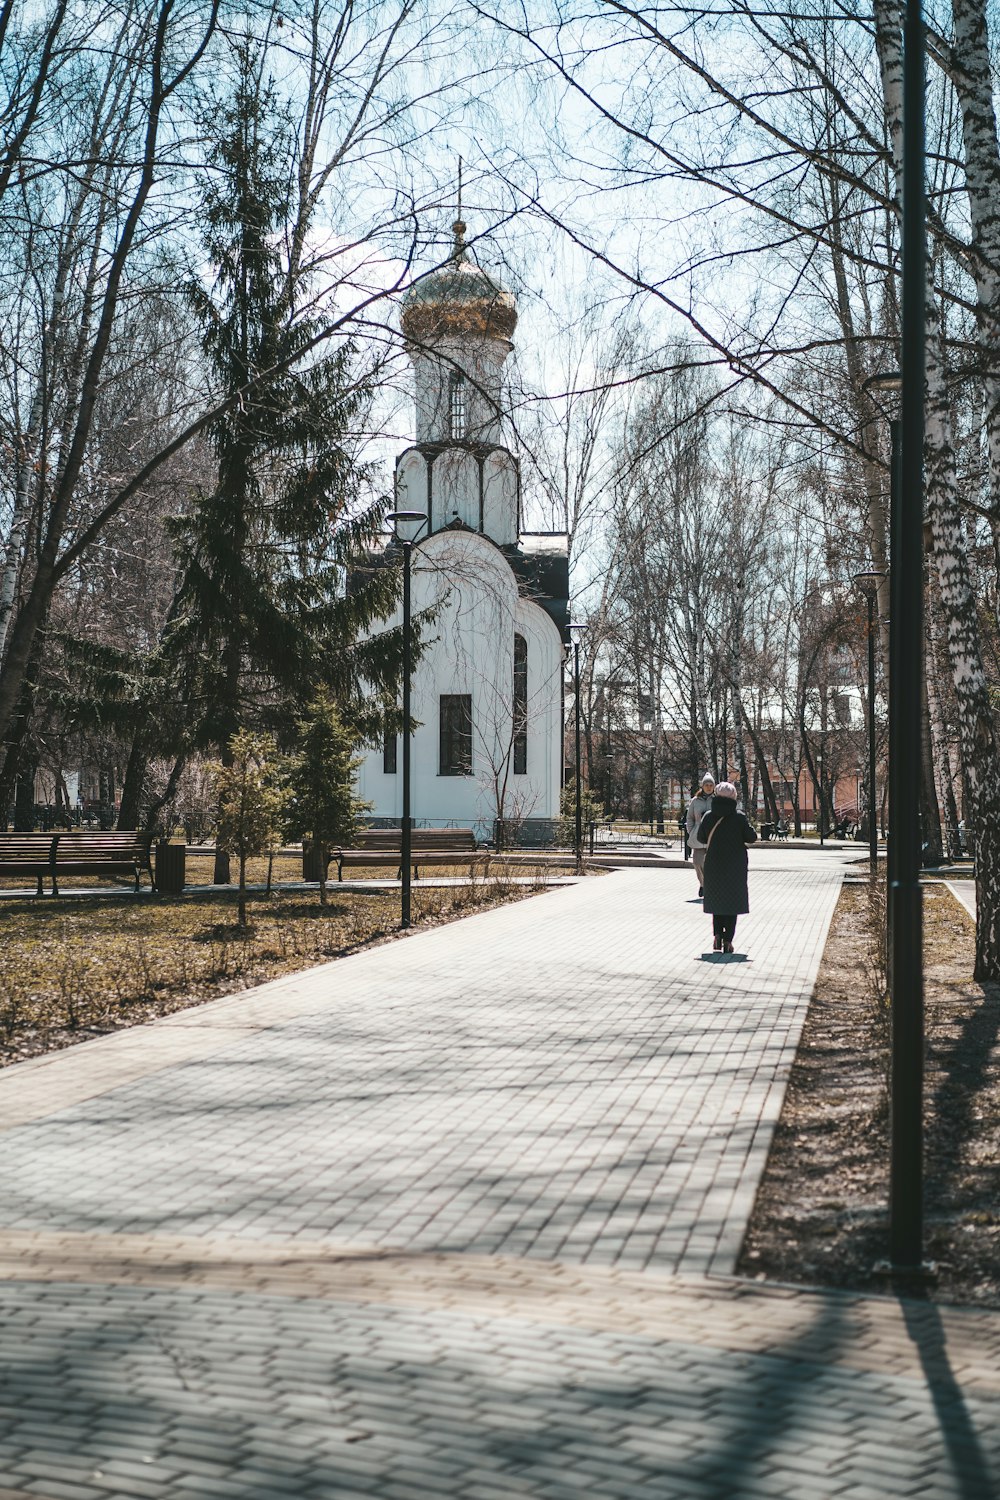 a person walking down a path in a park